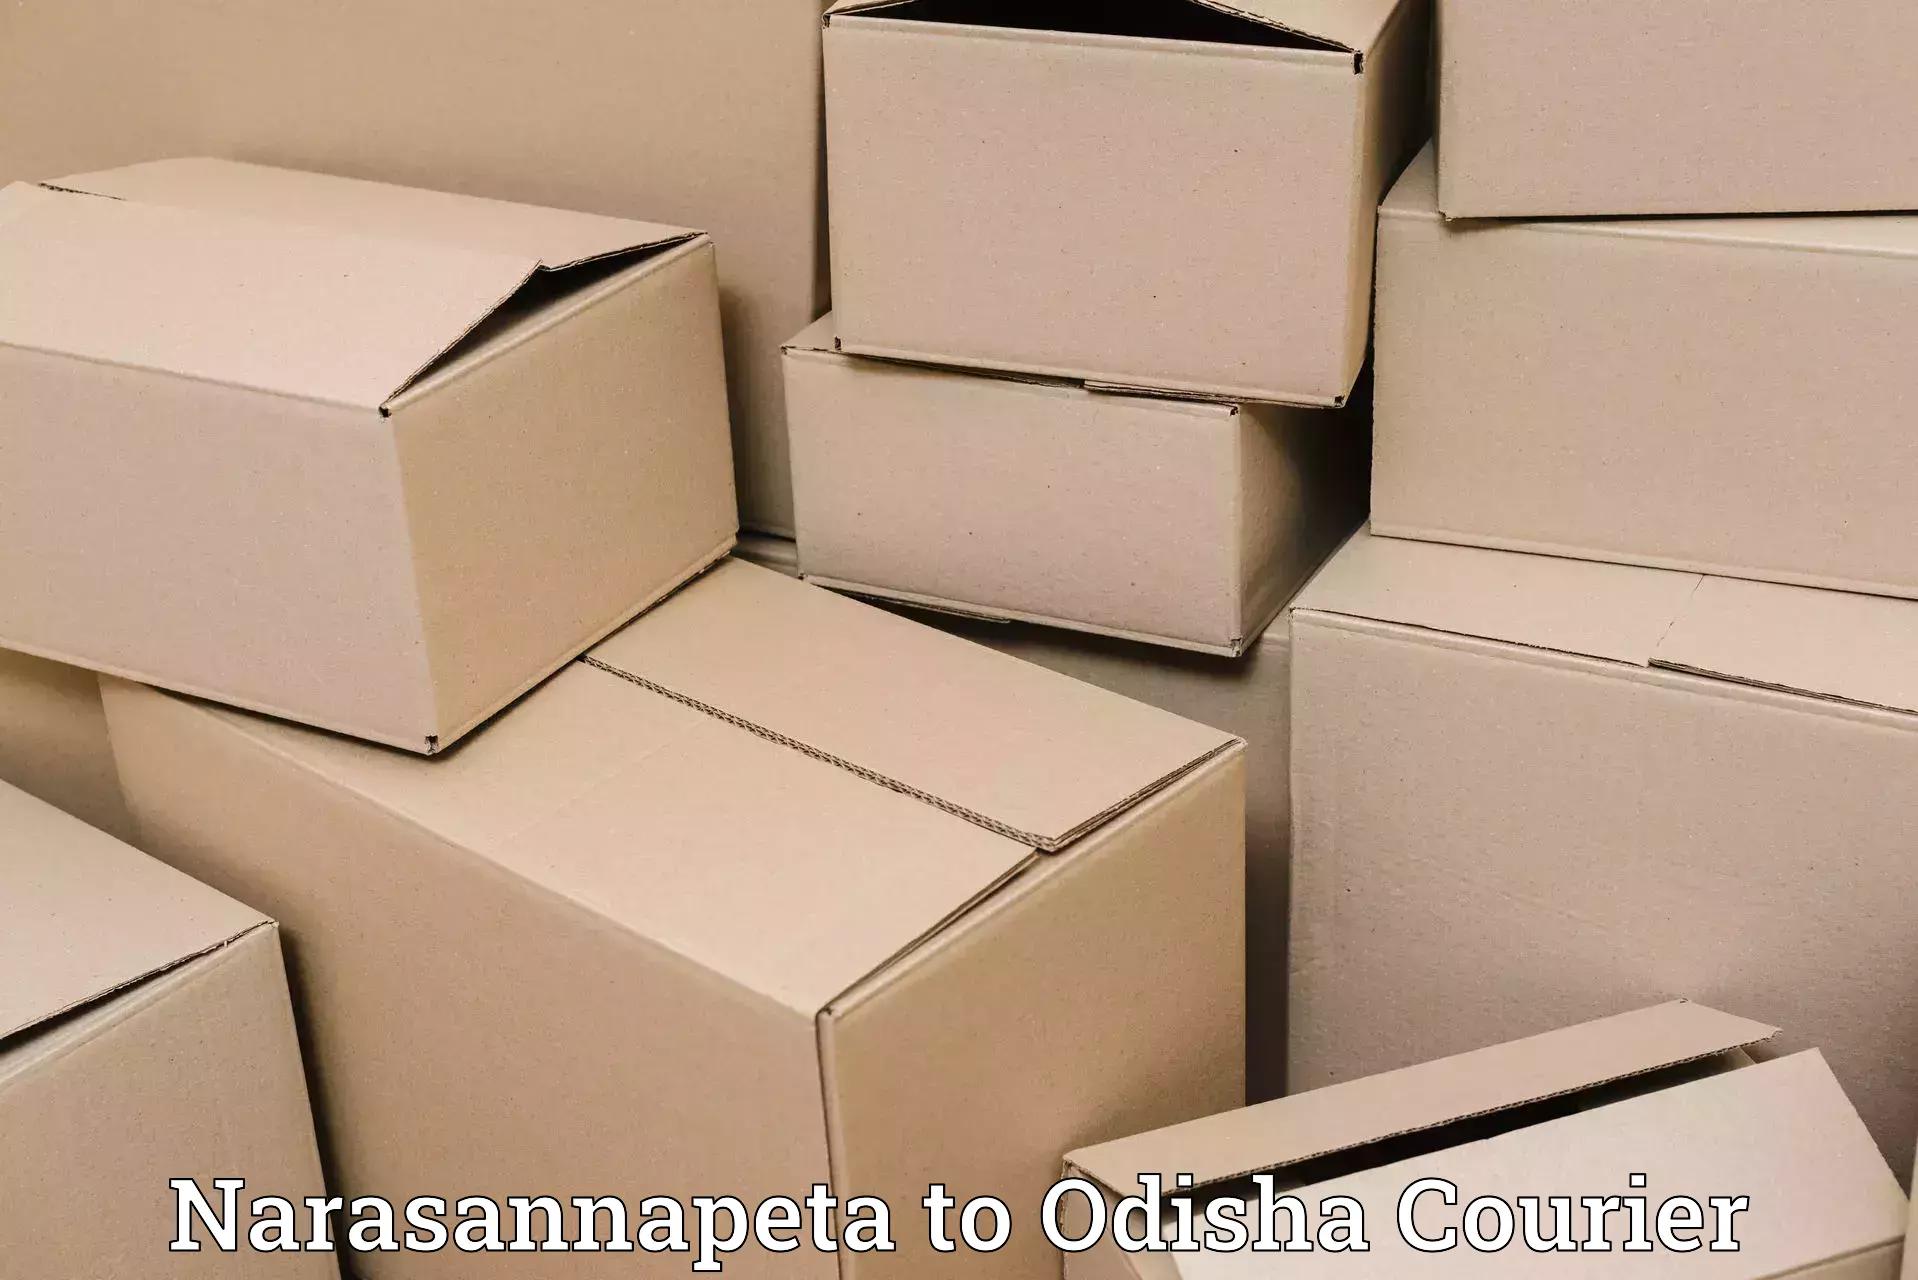 Efficient order fulfillment Narasannapeta to Gunupur